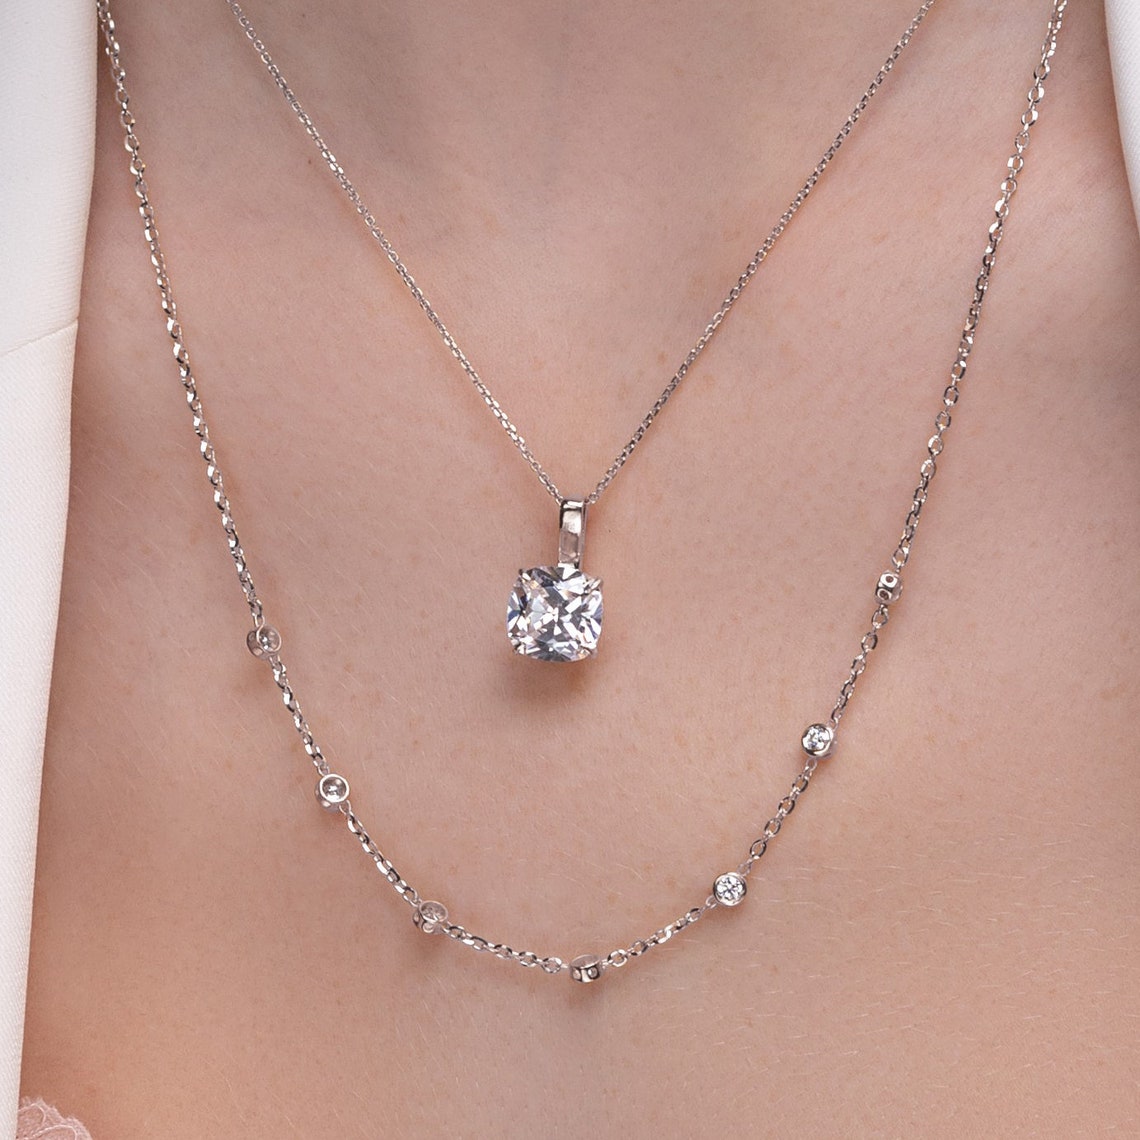 Cushion Cut Diamond Necklace Pendant White Gold 14K-18K White | Etsy